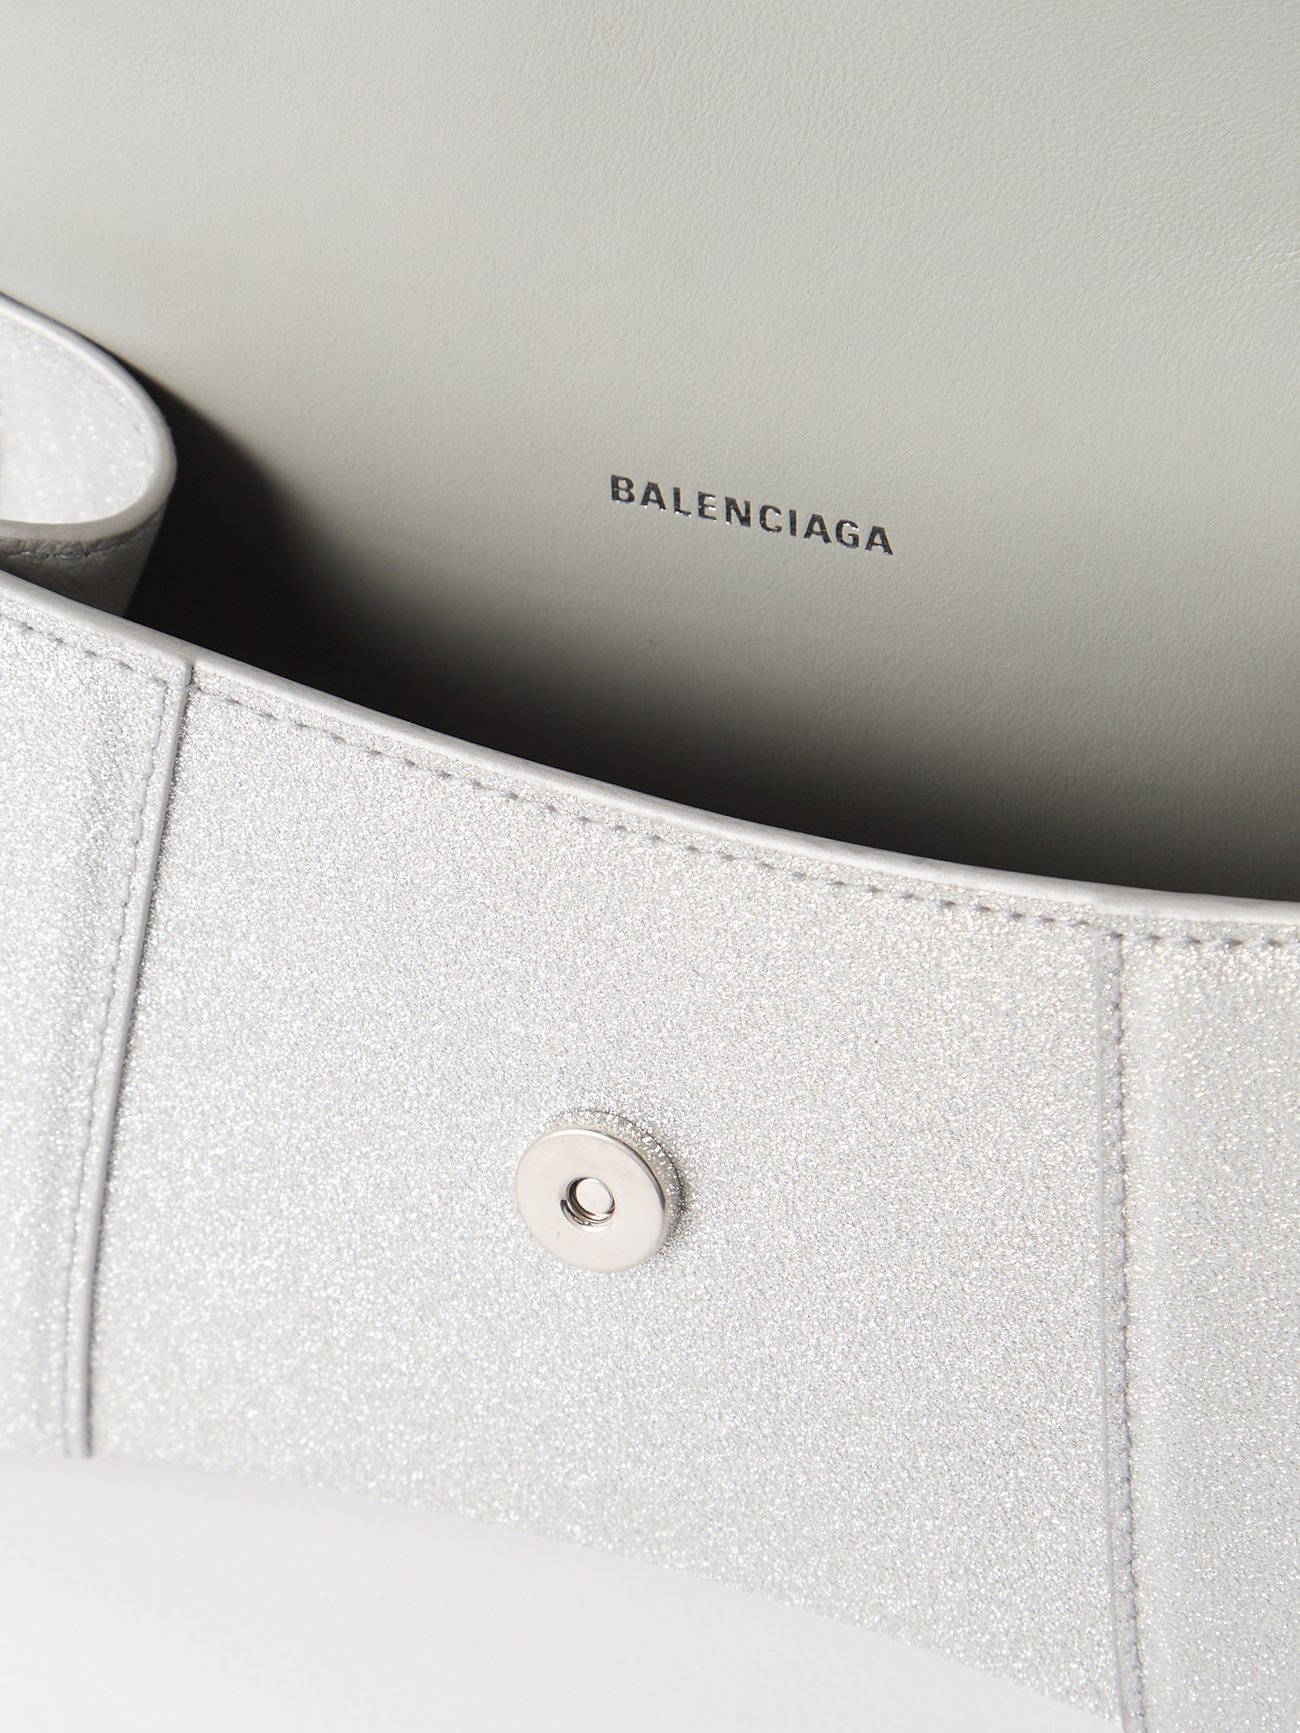 Balenciaga Hourglass Silver Sequins Leather Top Handle Bag